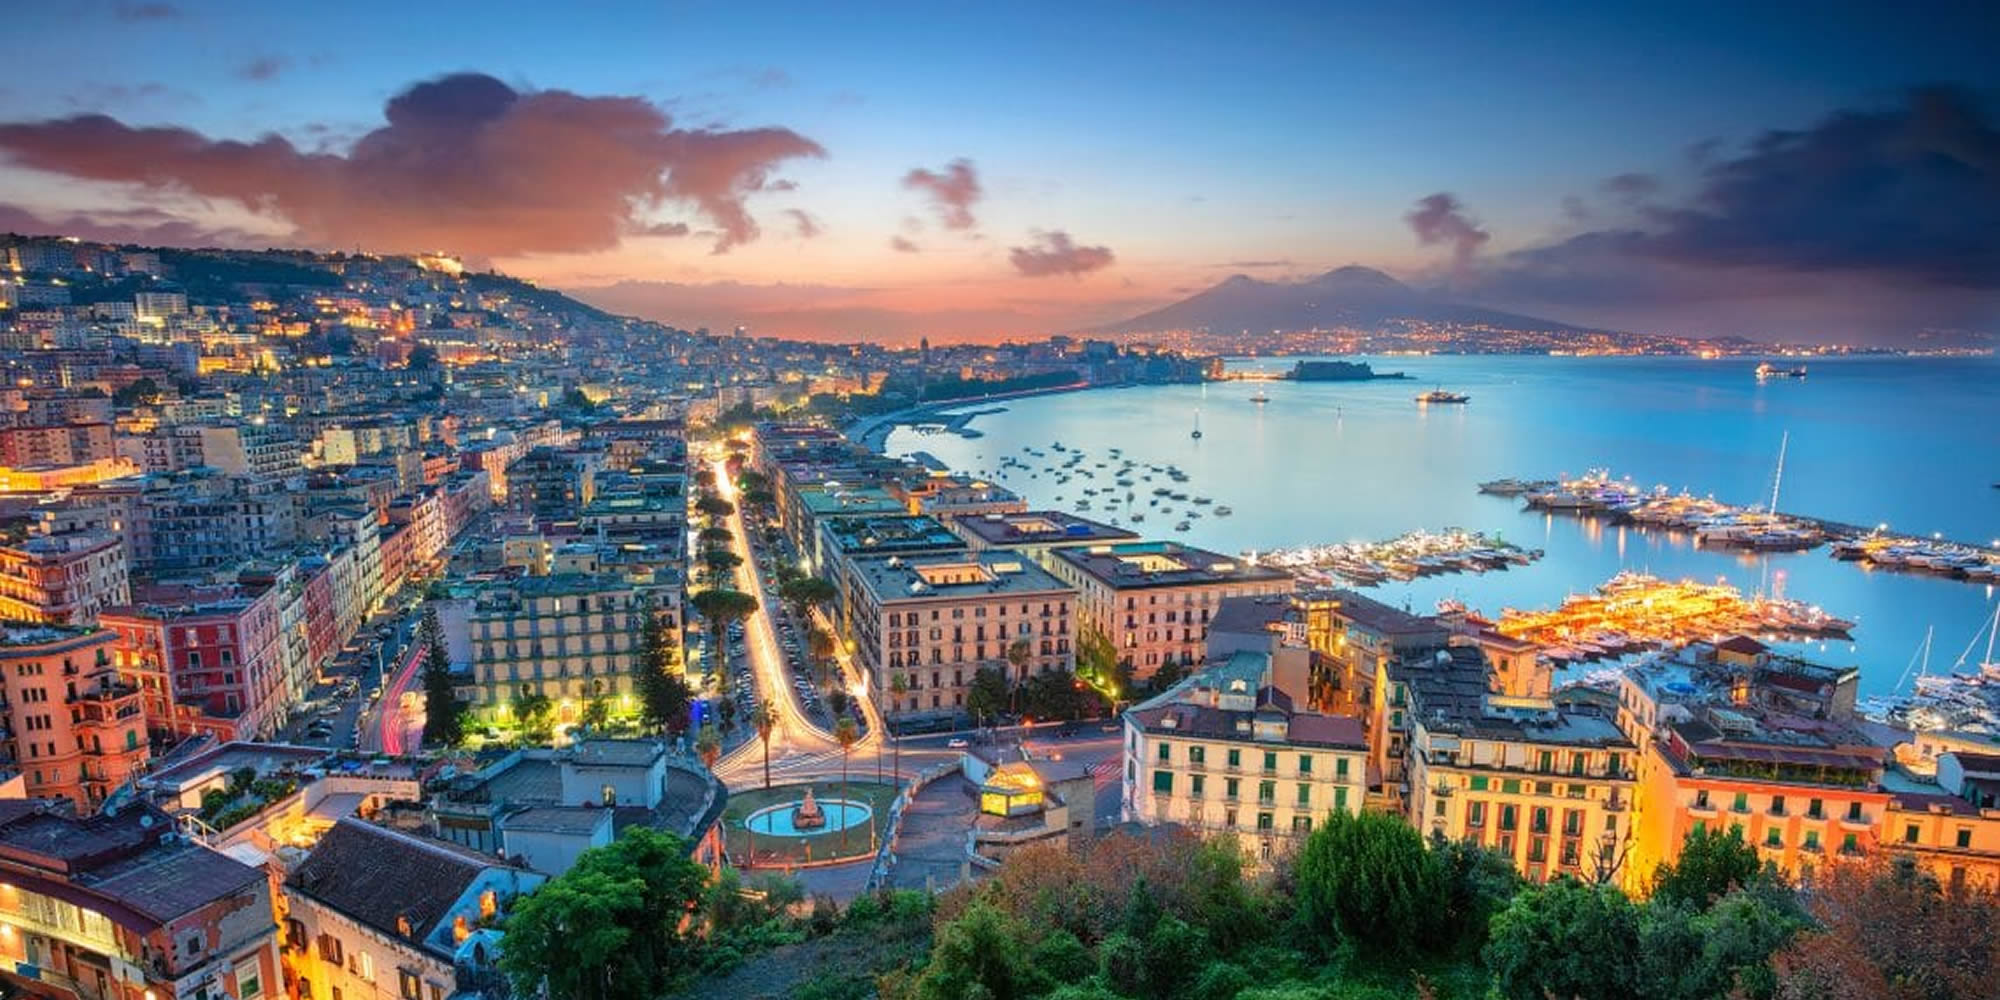 Naples cruise port